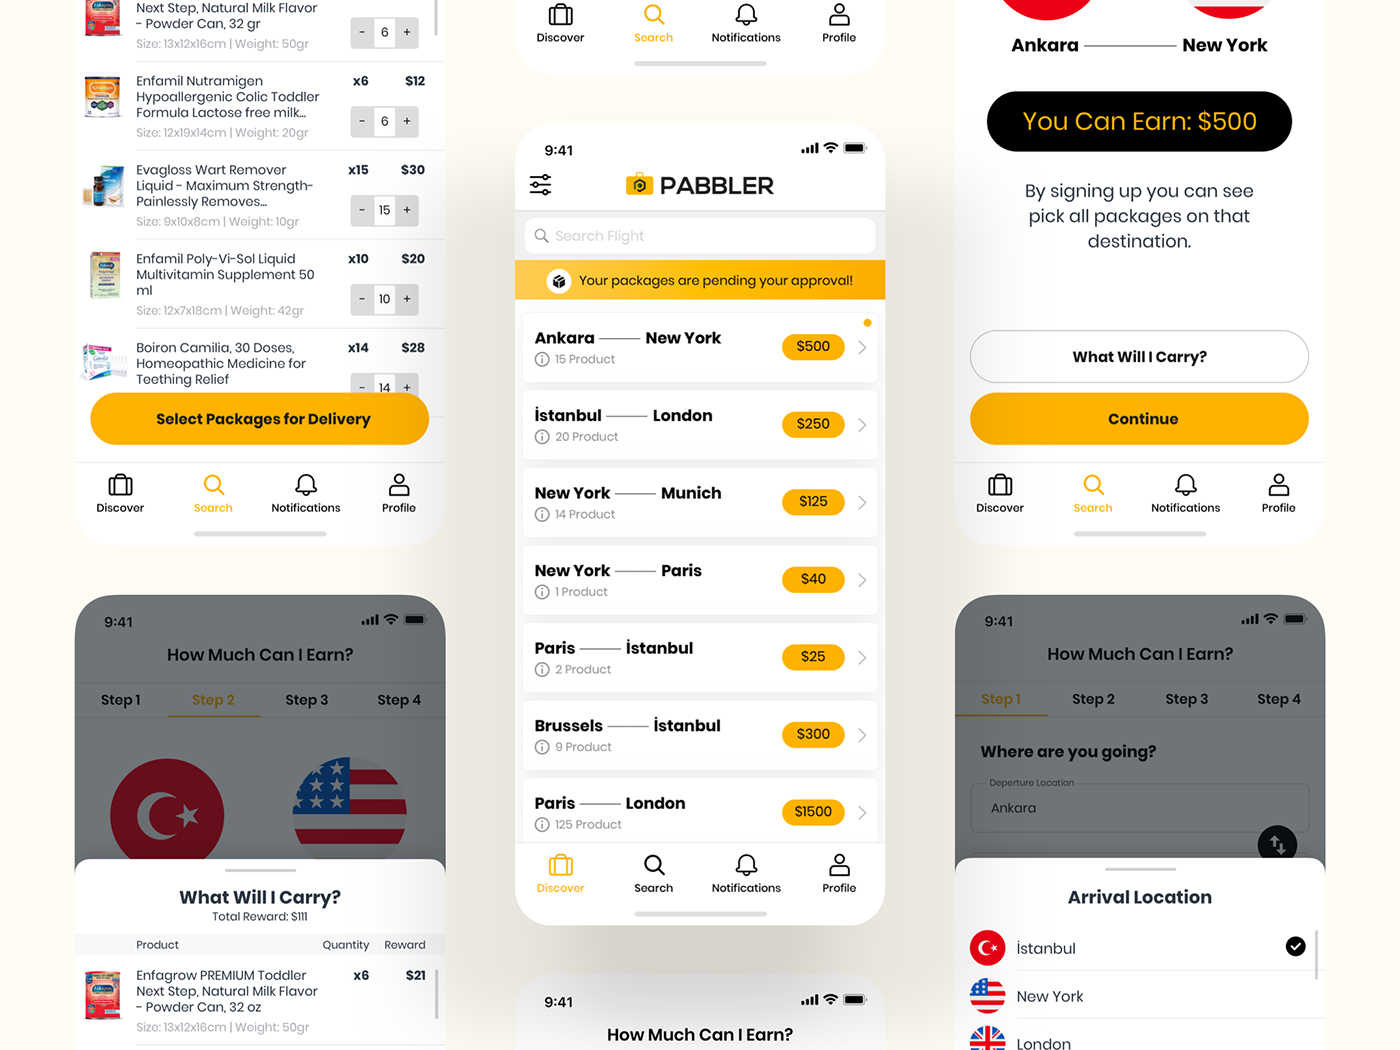 Application Design Booking flight luggage Onboarding pabbler Startup startups widget yellow